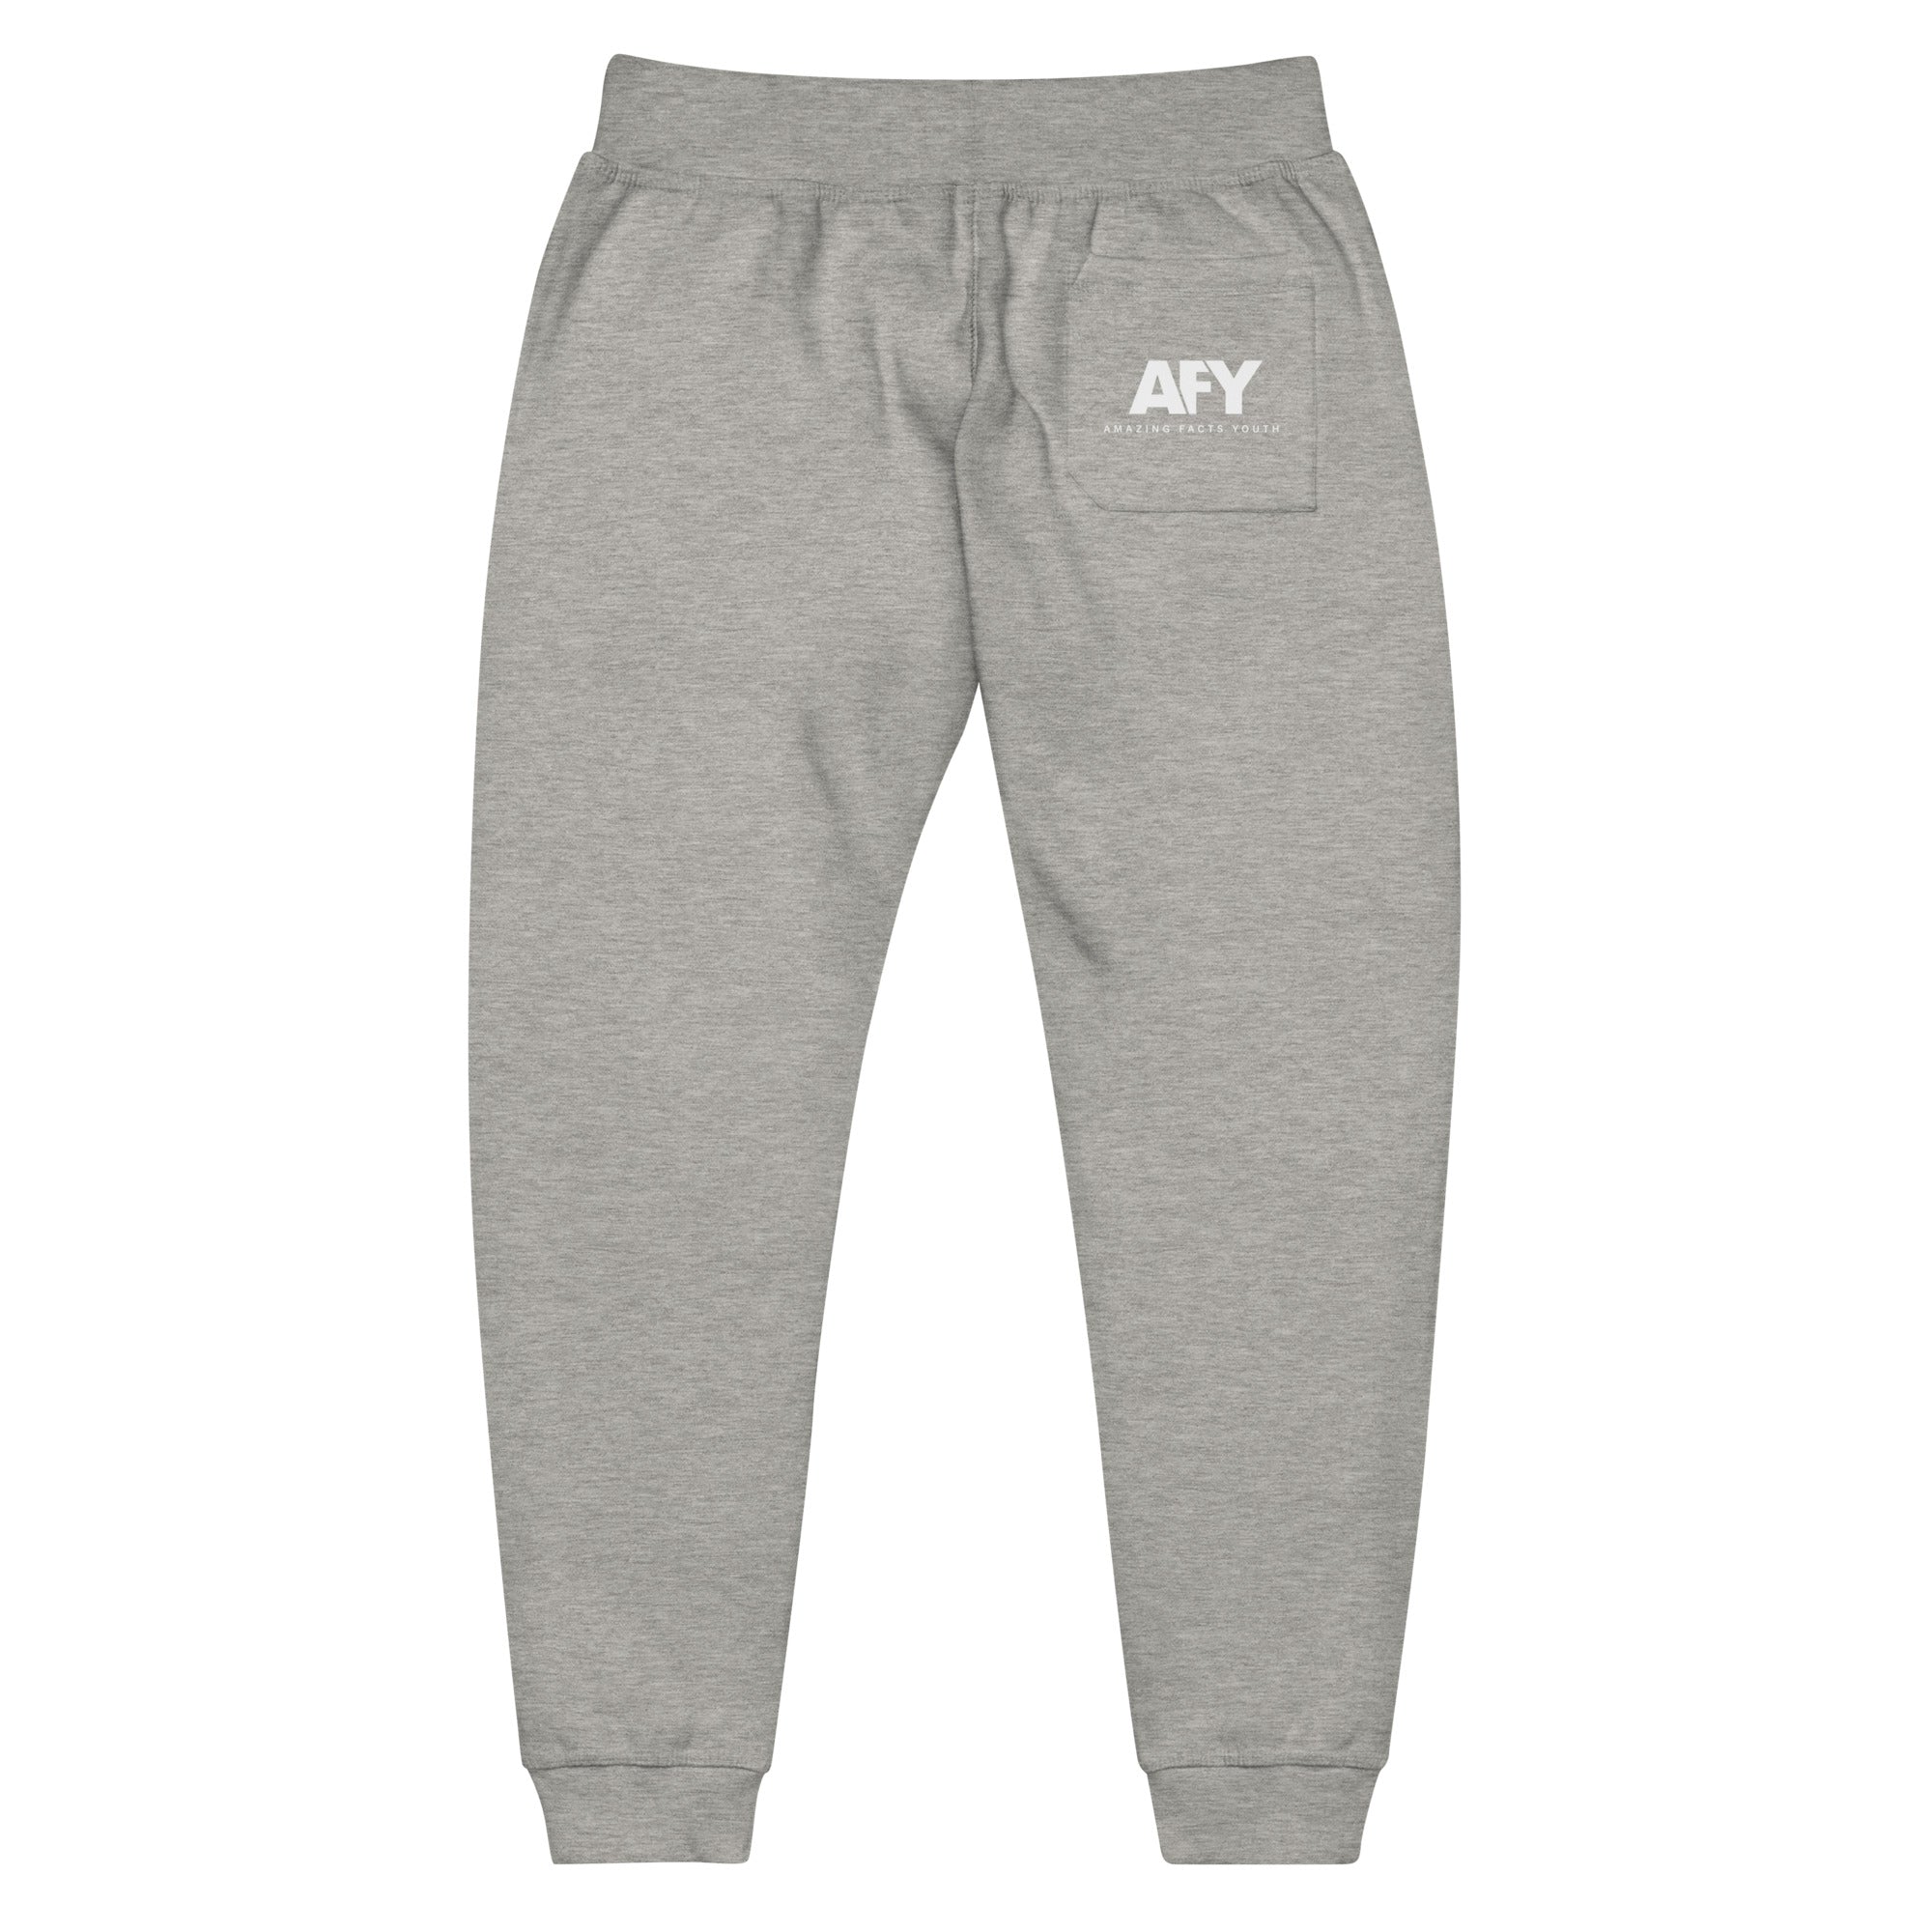 AFY Unisex Fleece Sweatpants